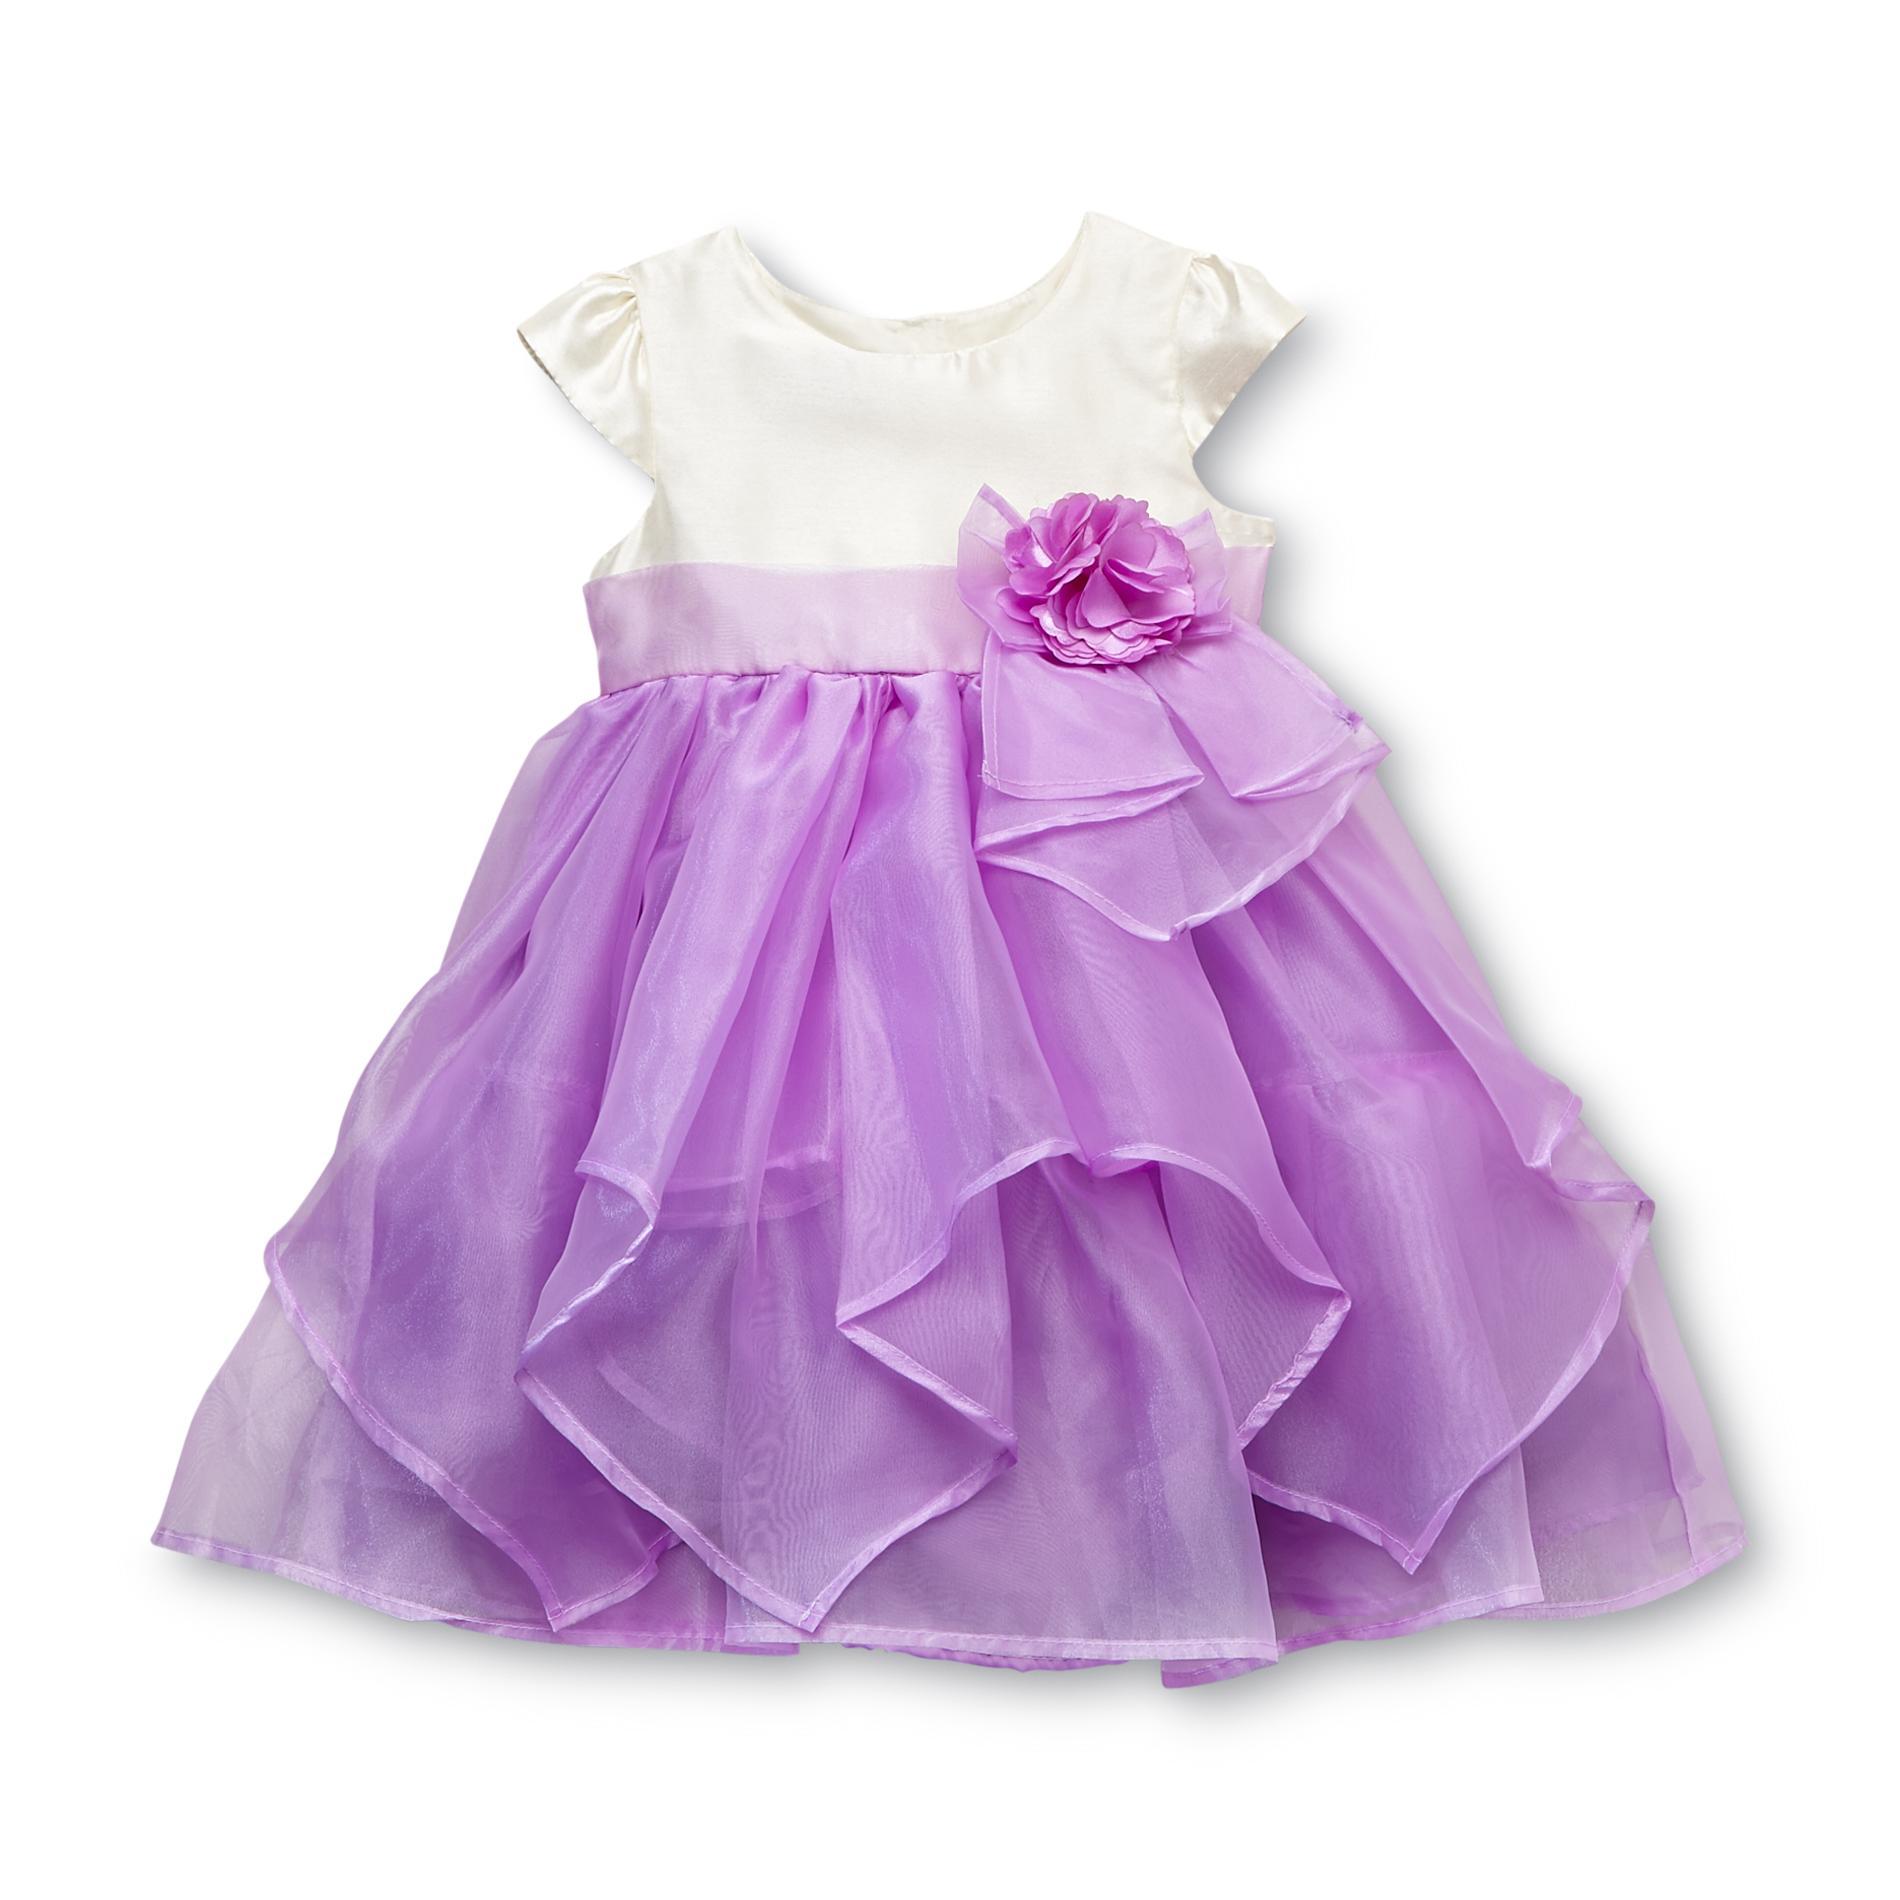 WonderKids Infant & Toddler Girl's Organza Party Dress